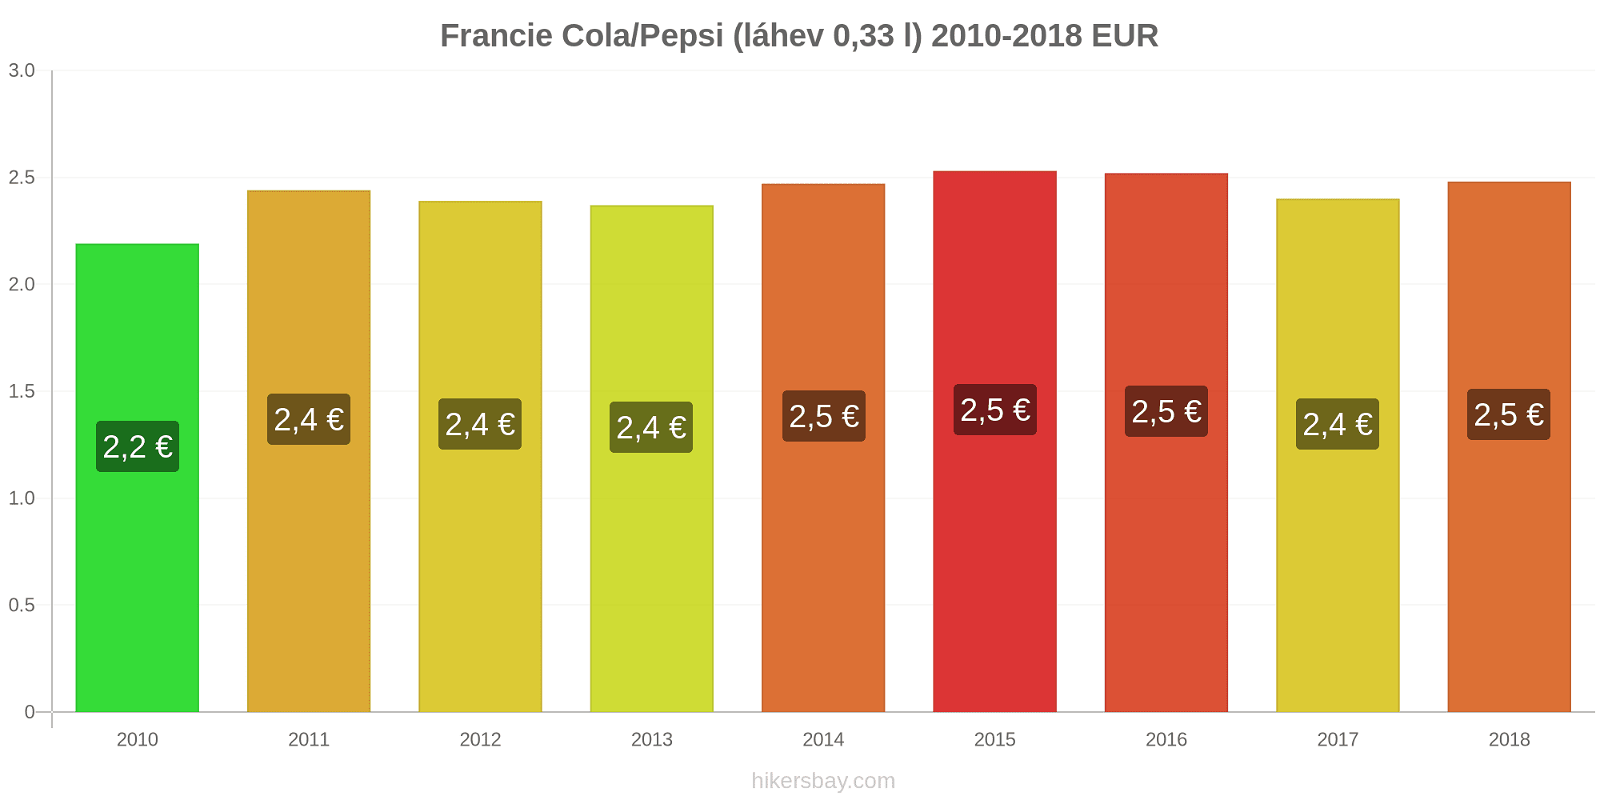 Francie změny cen Coca-Cola/Pepsi (láhev 0.33 l) hikersbay.com